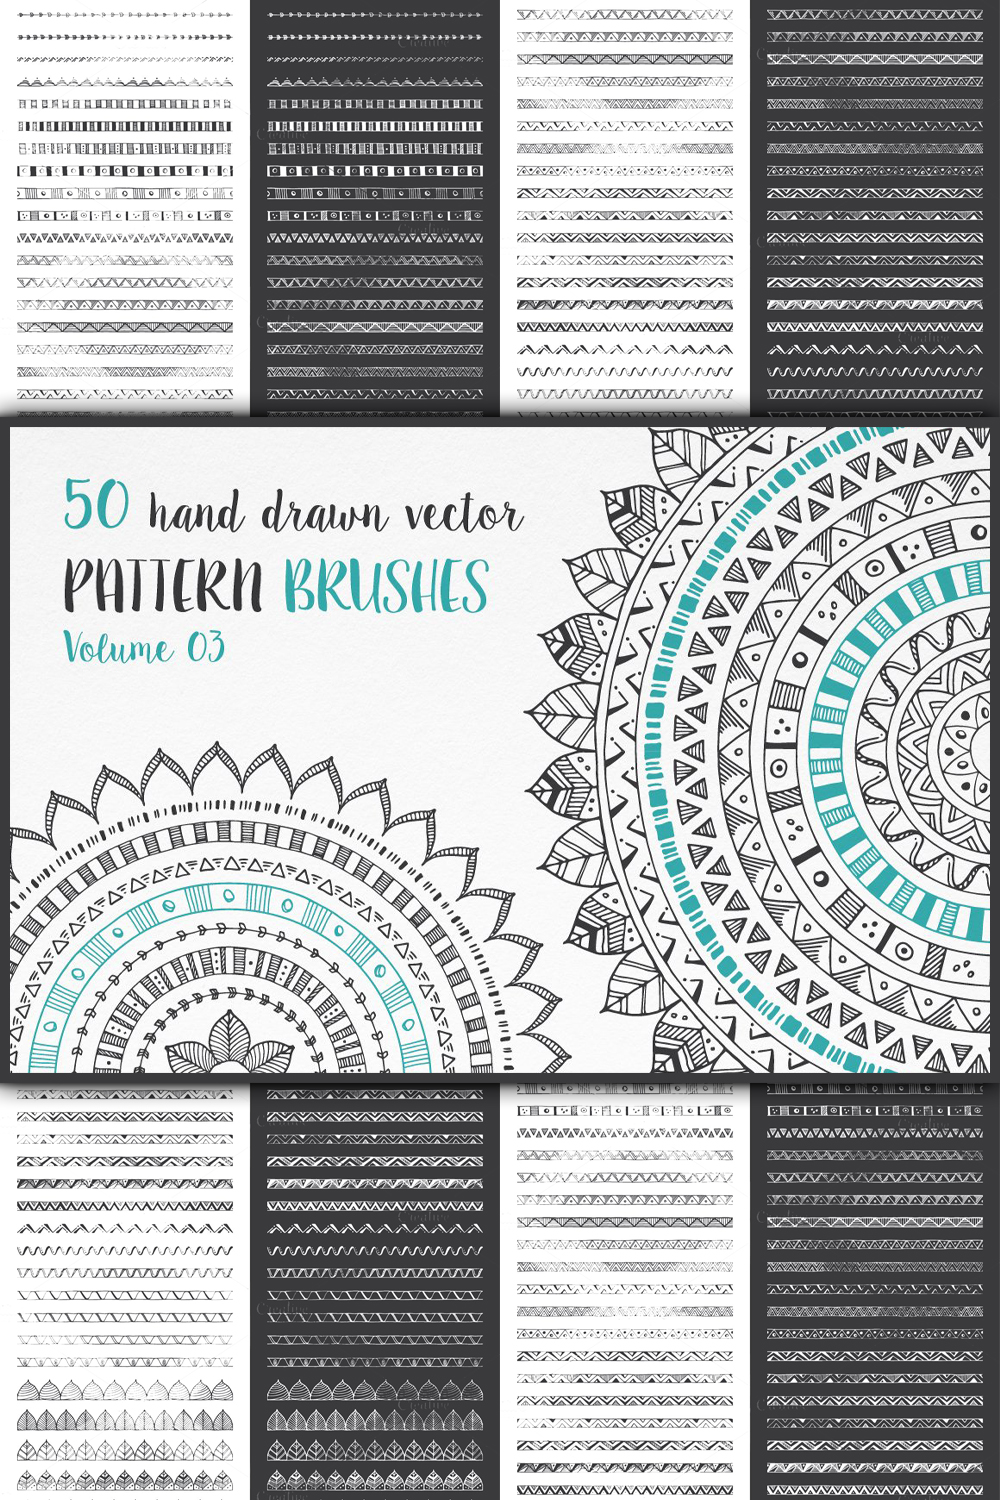 Hand drawn pattern brushes vol 03 of pinterest.